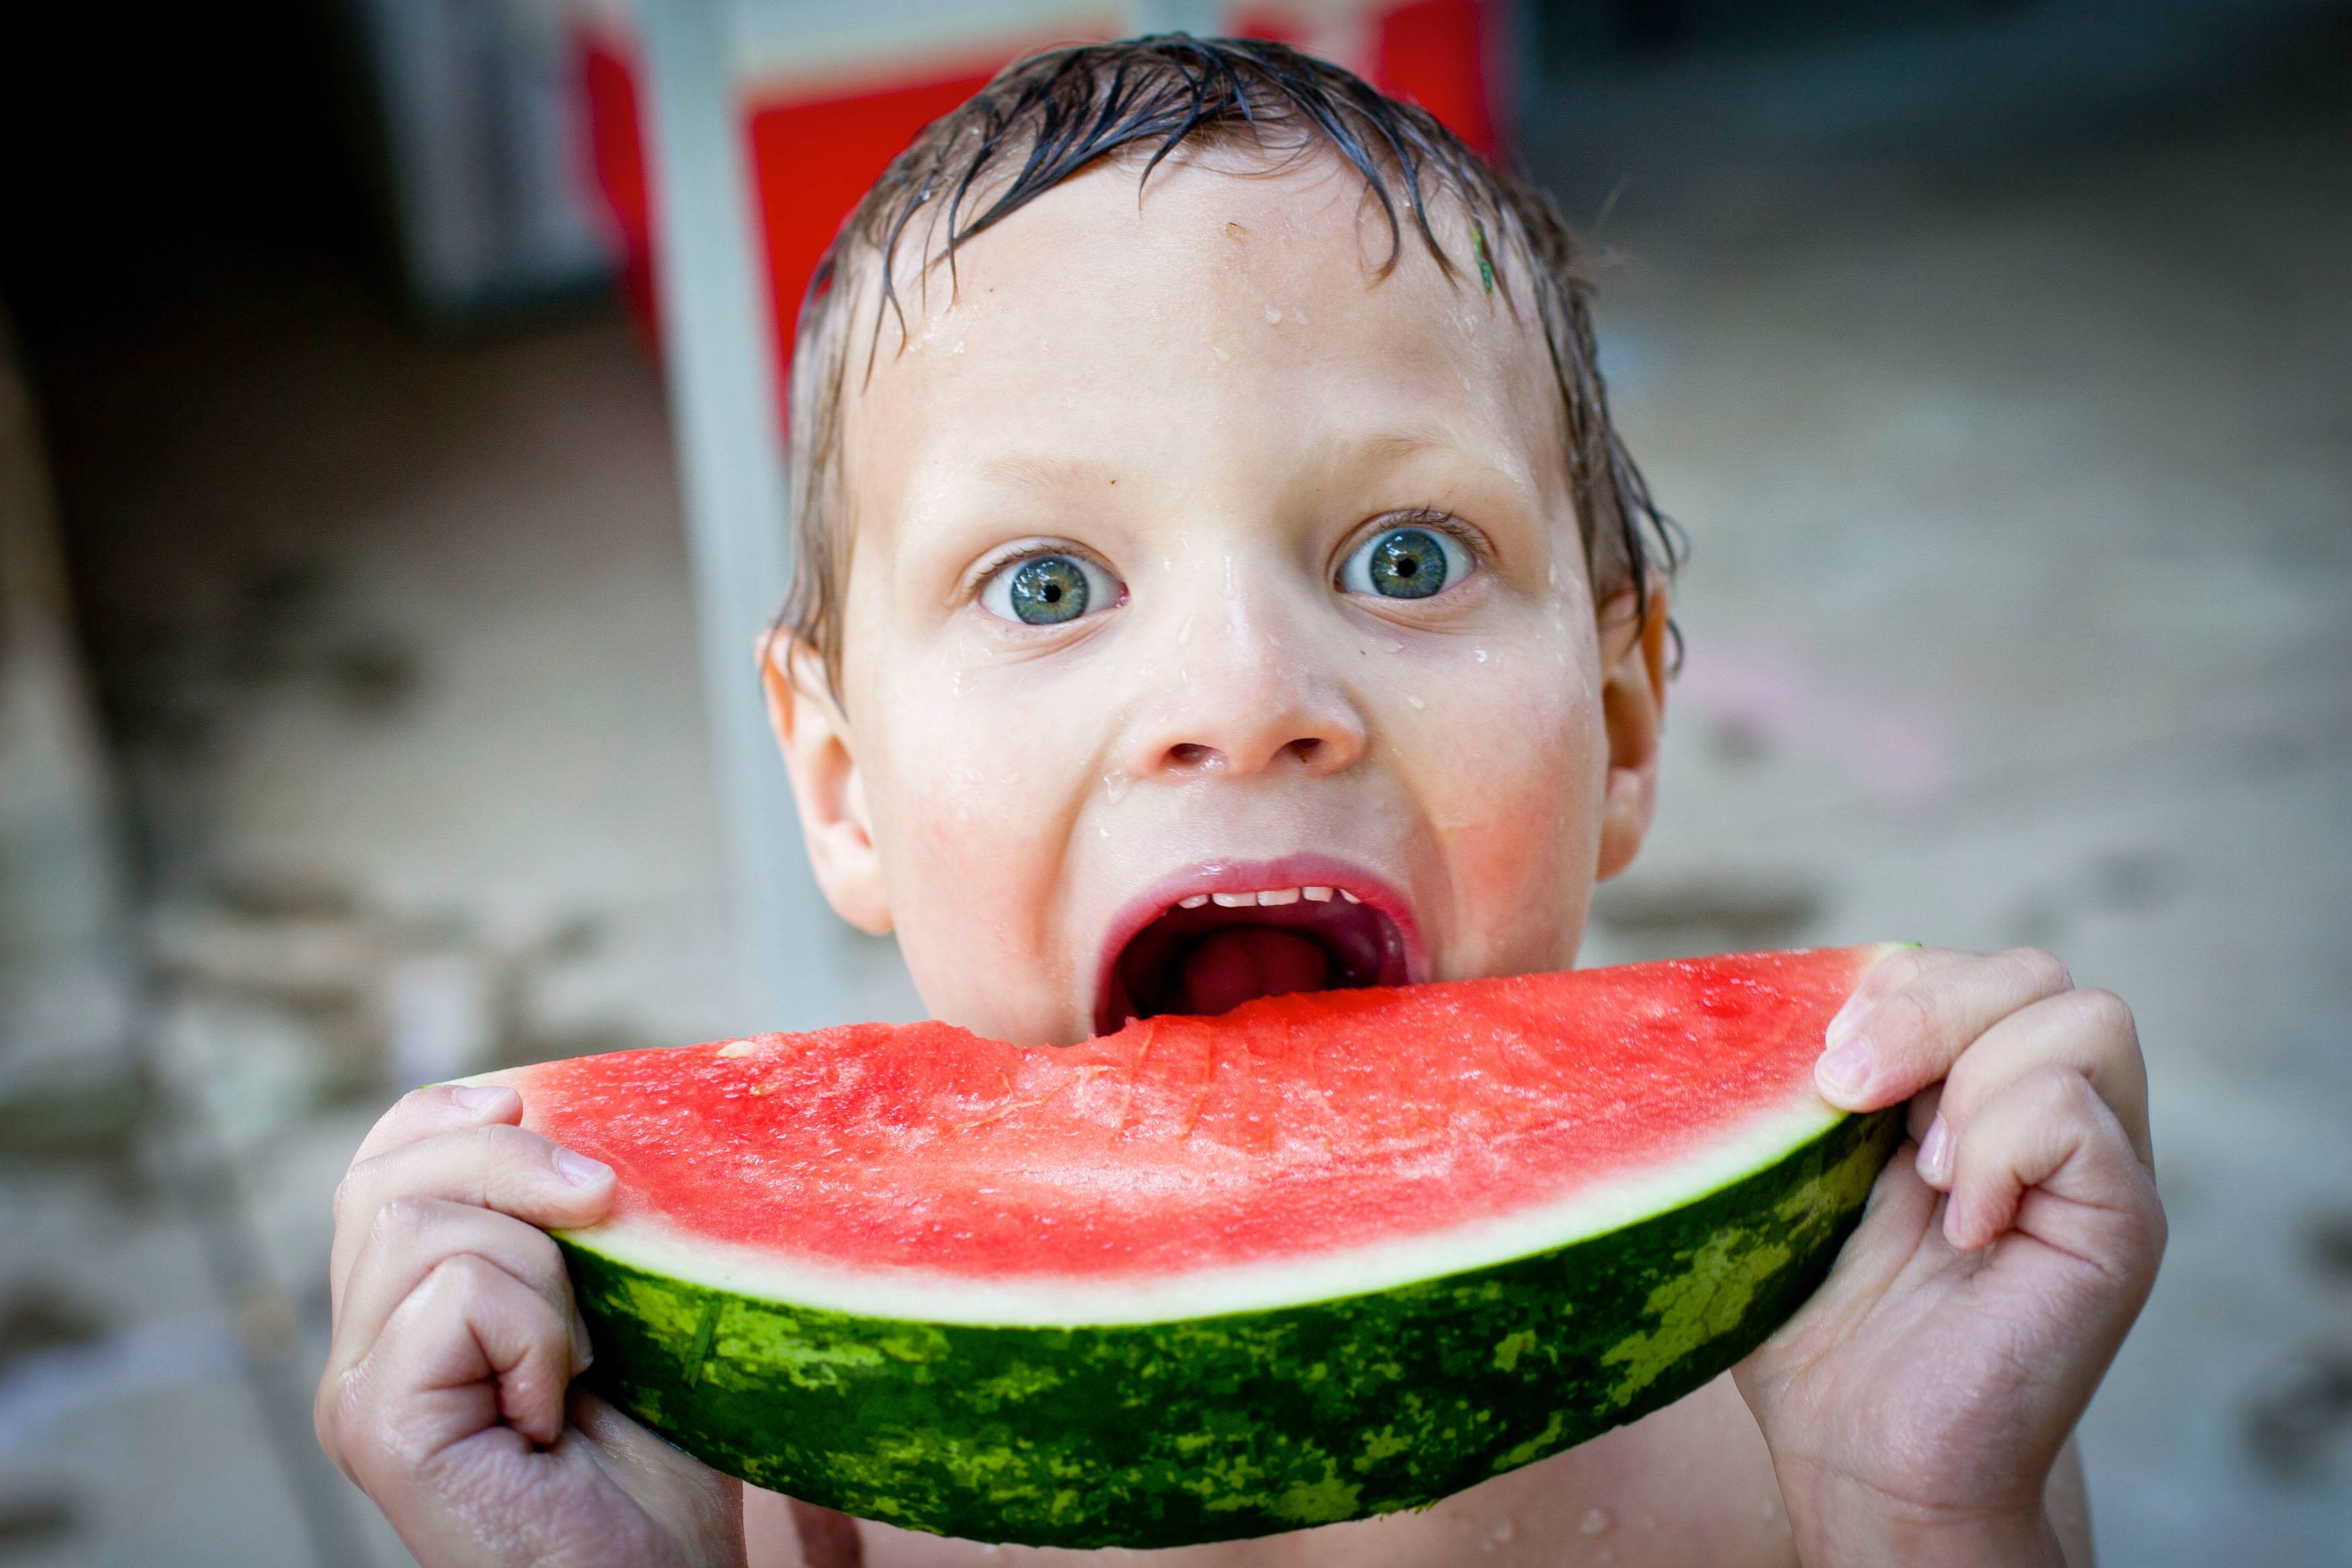 Watermelon boy photo